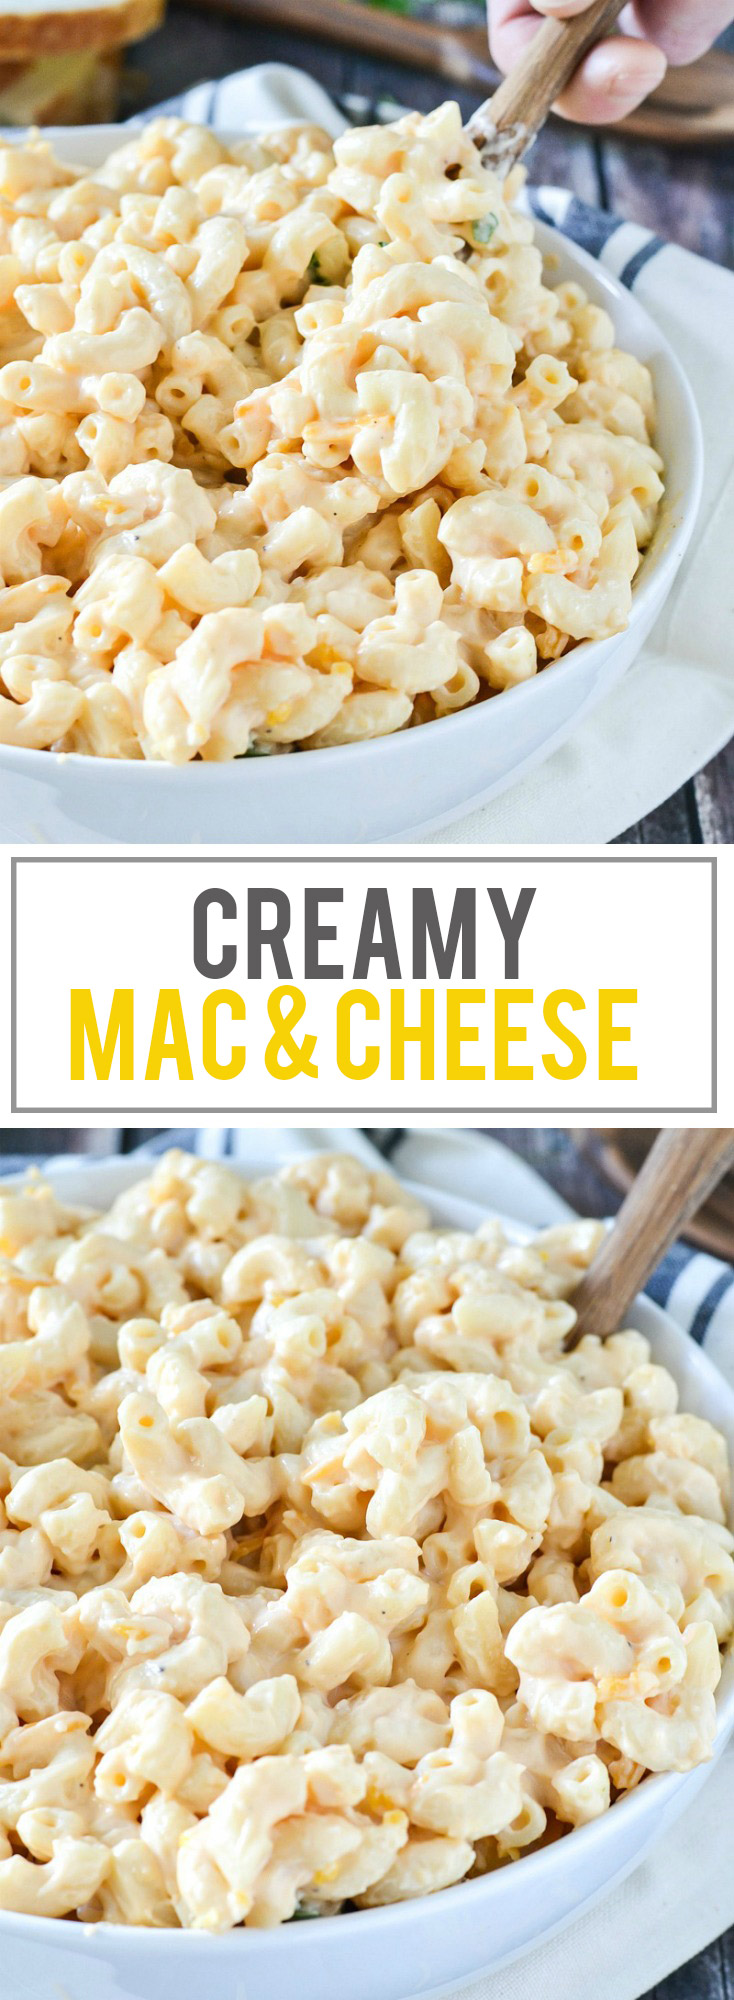 Creamy Macaroni and Cheese | www.motherthyme.com